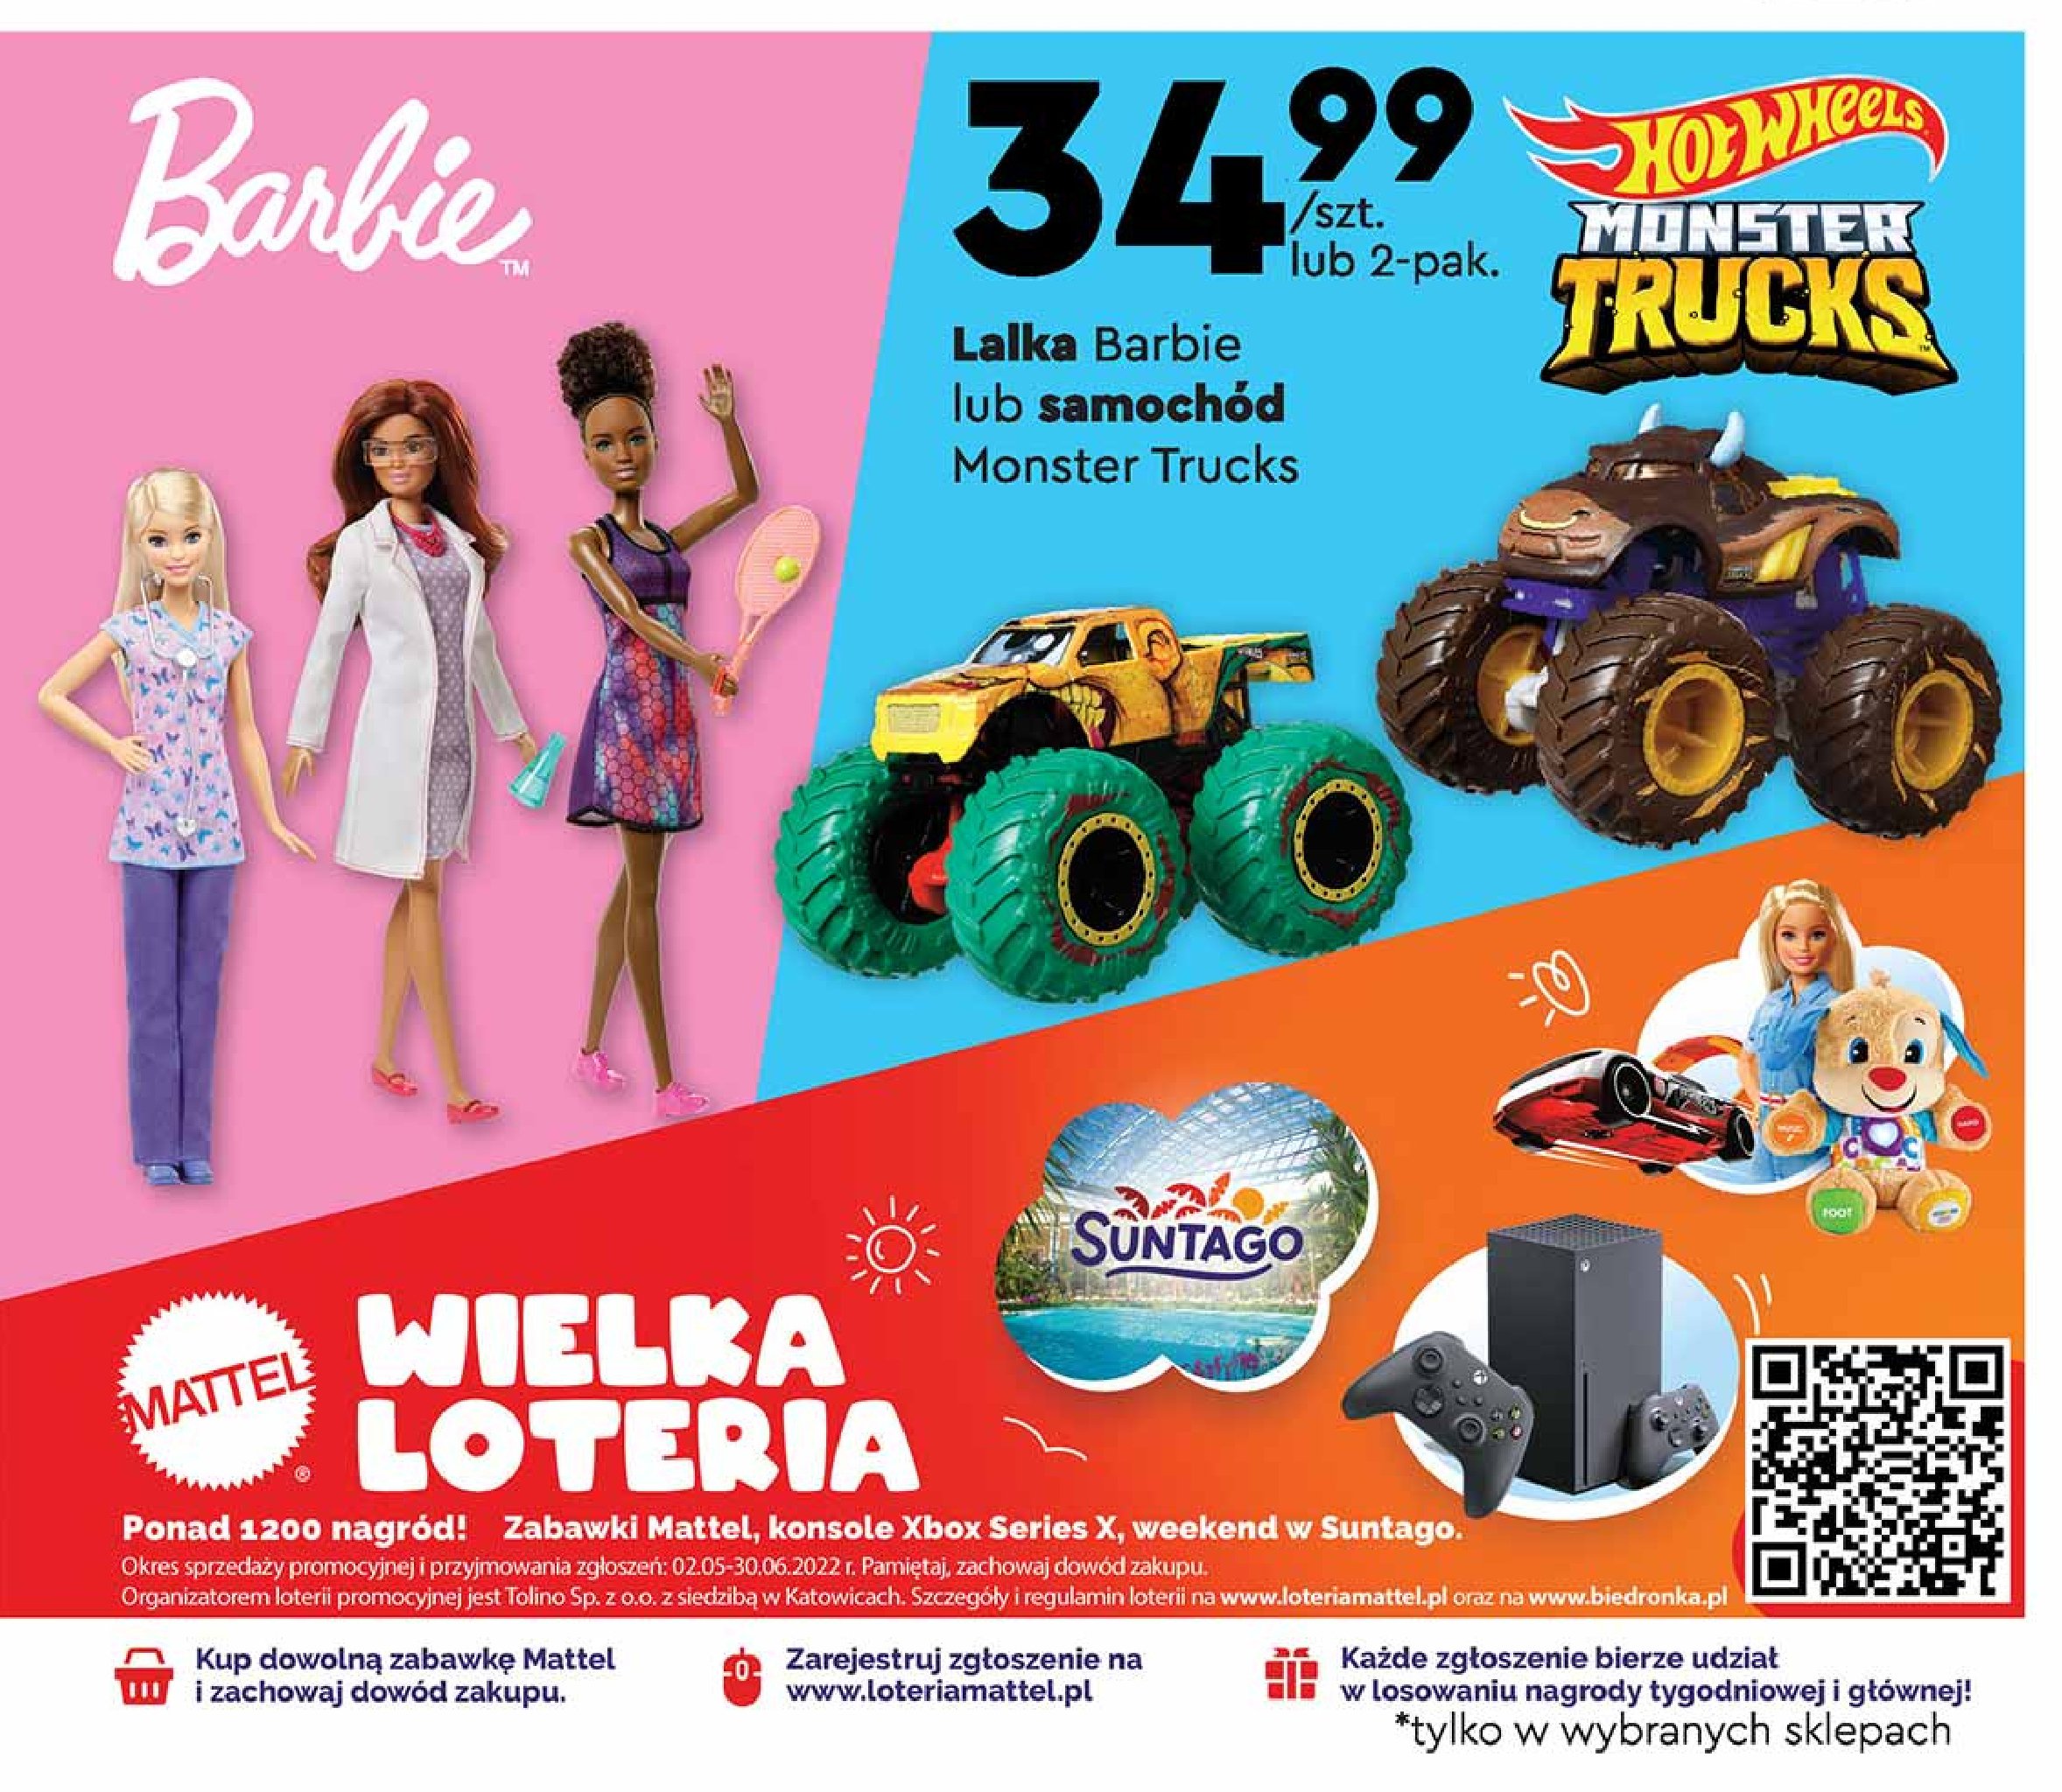 Barbie naukowiec Mattel promocja